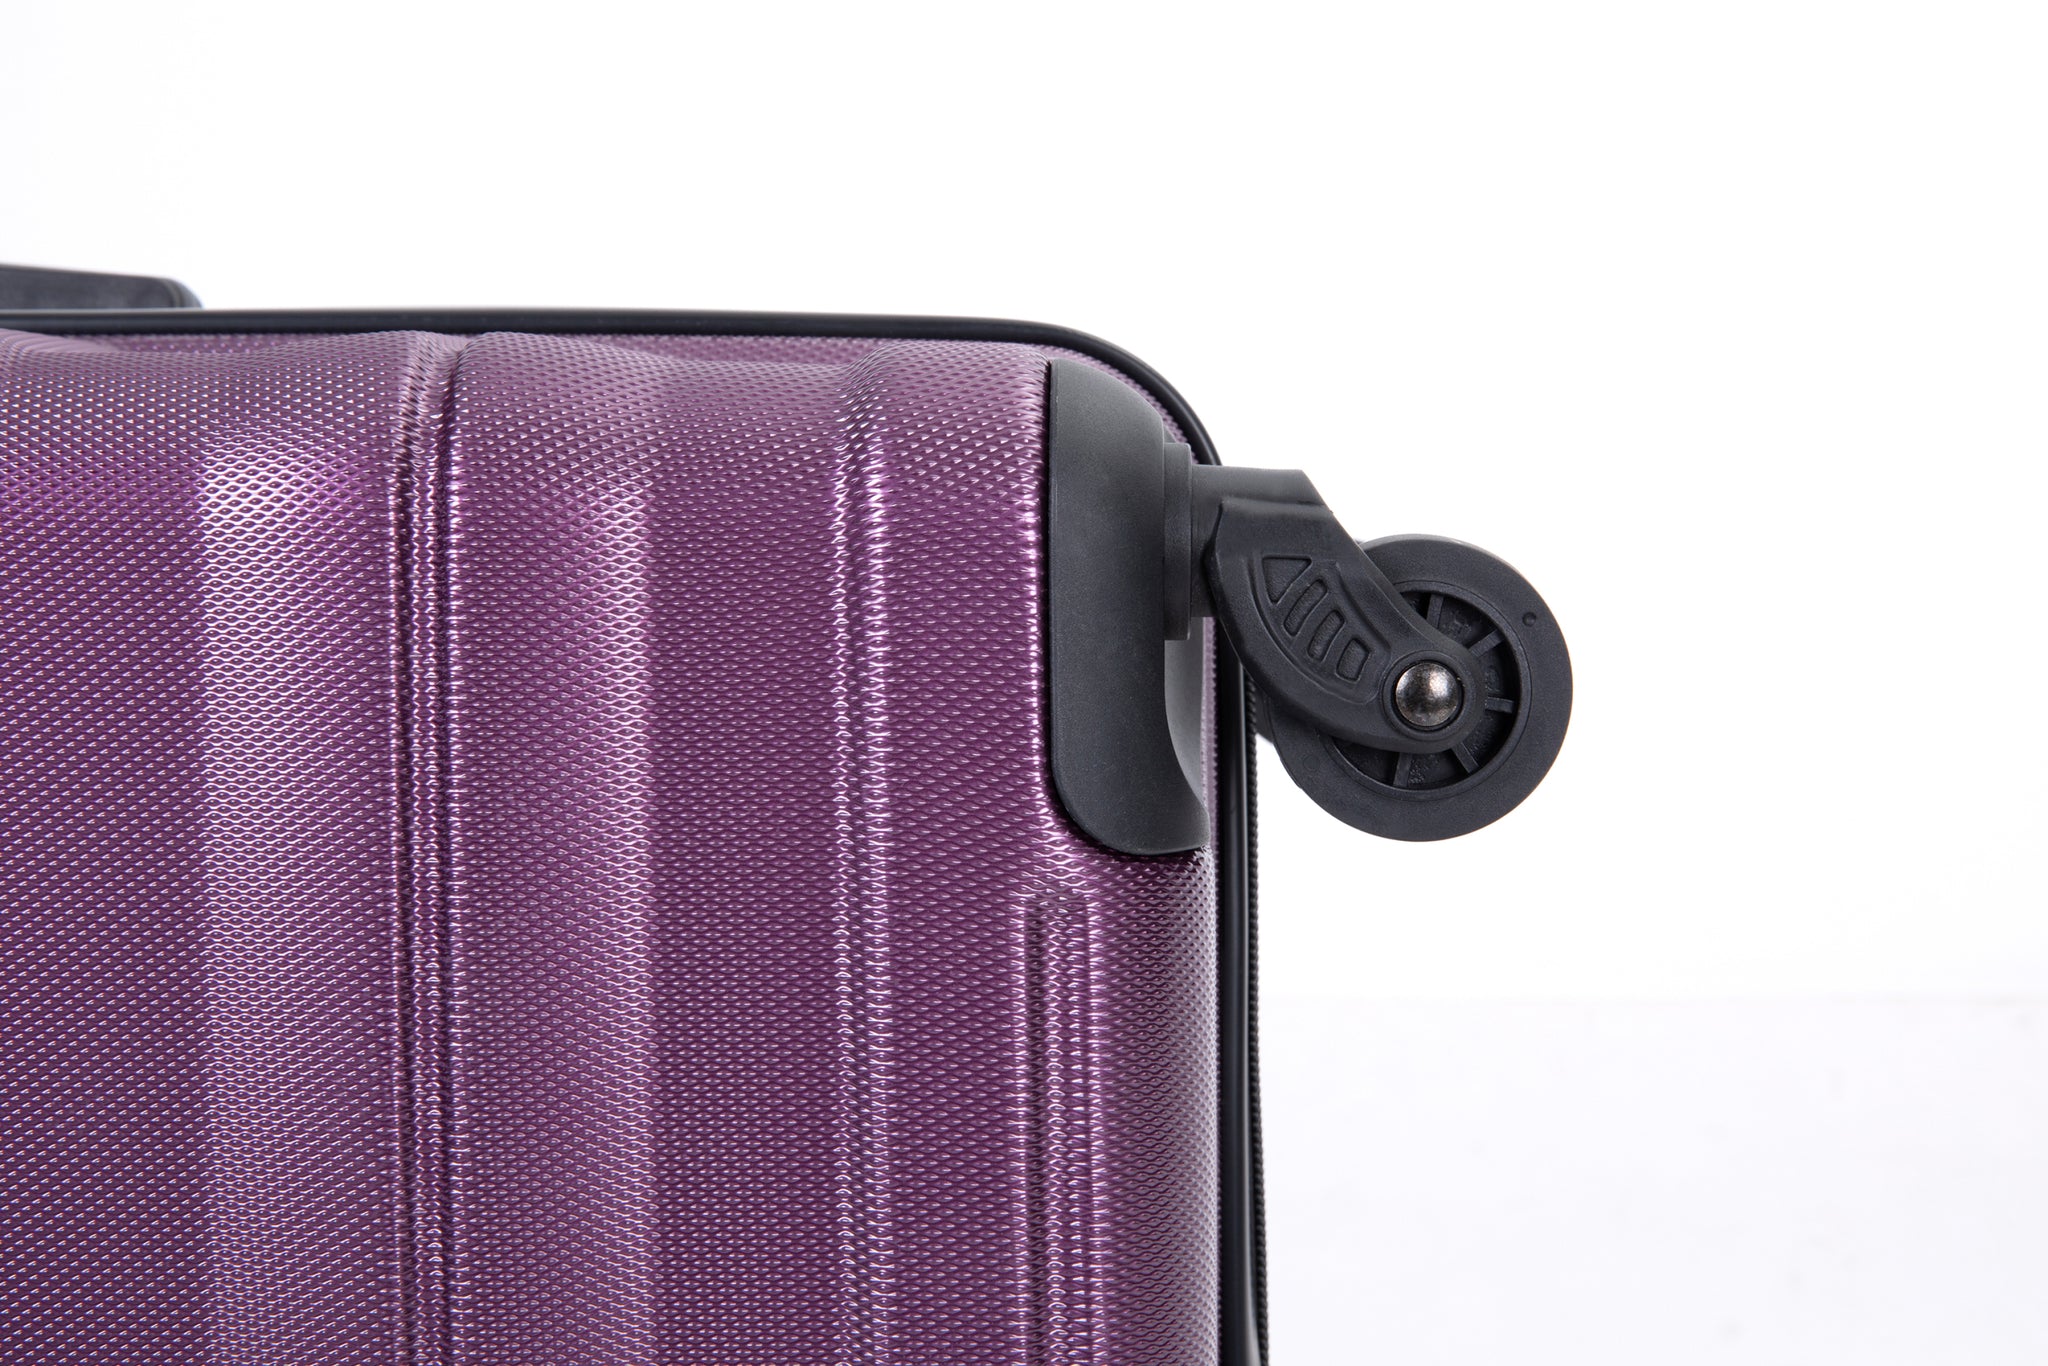 Expandable 3 Piece Luggage Sets PC Lightweight & dark purple-pc